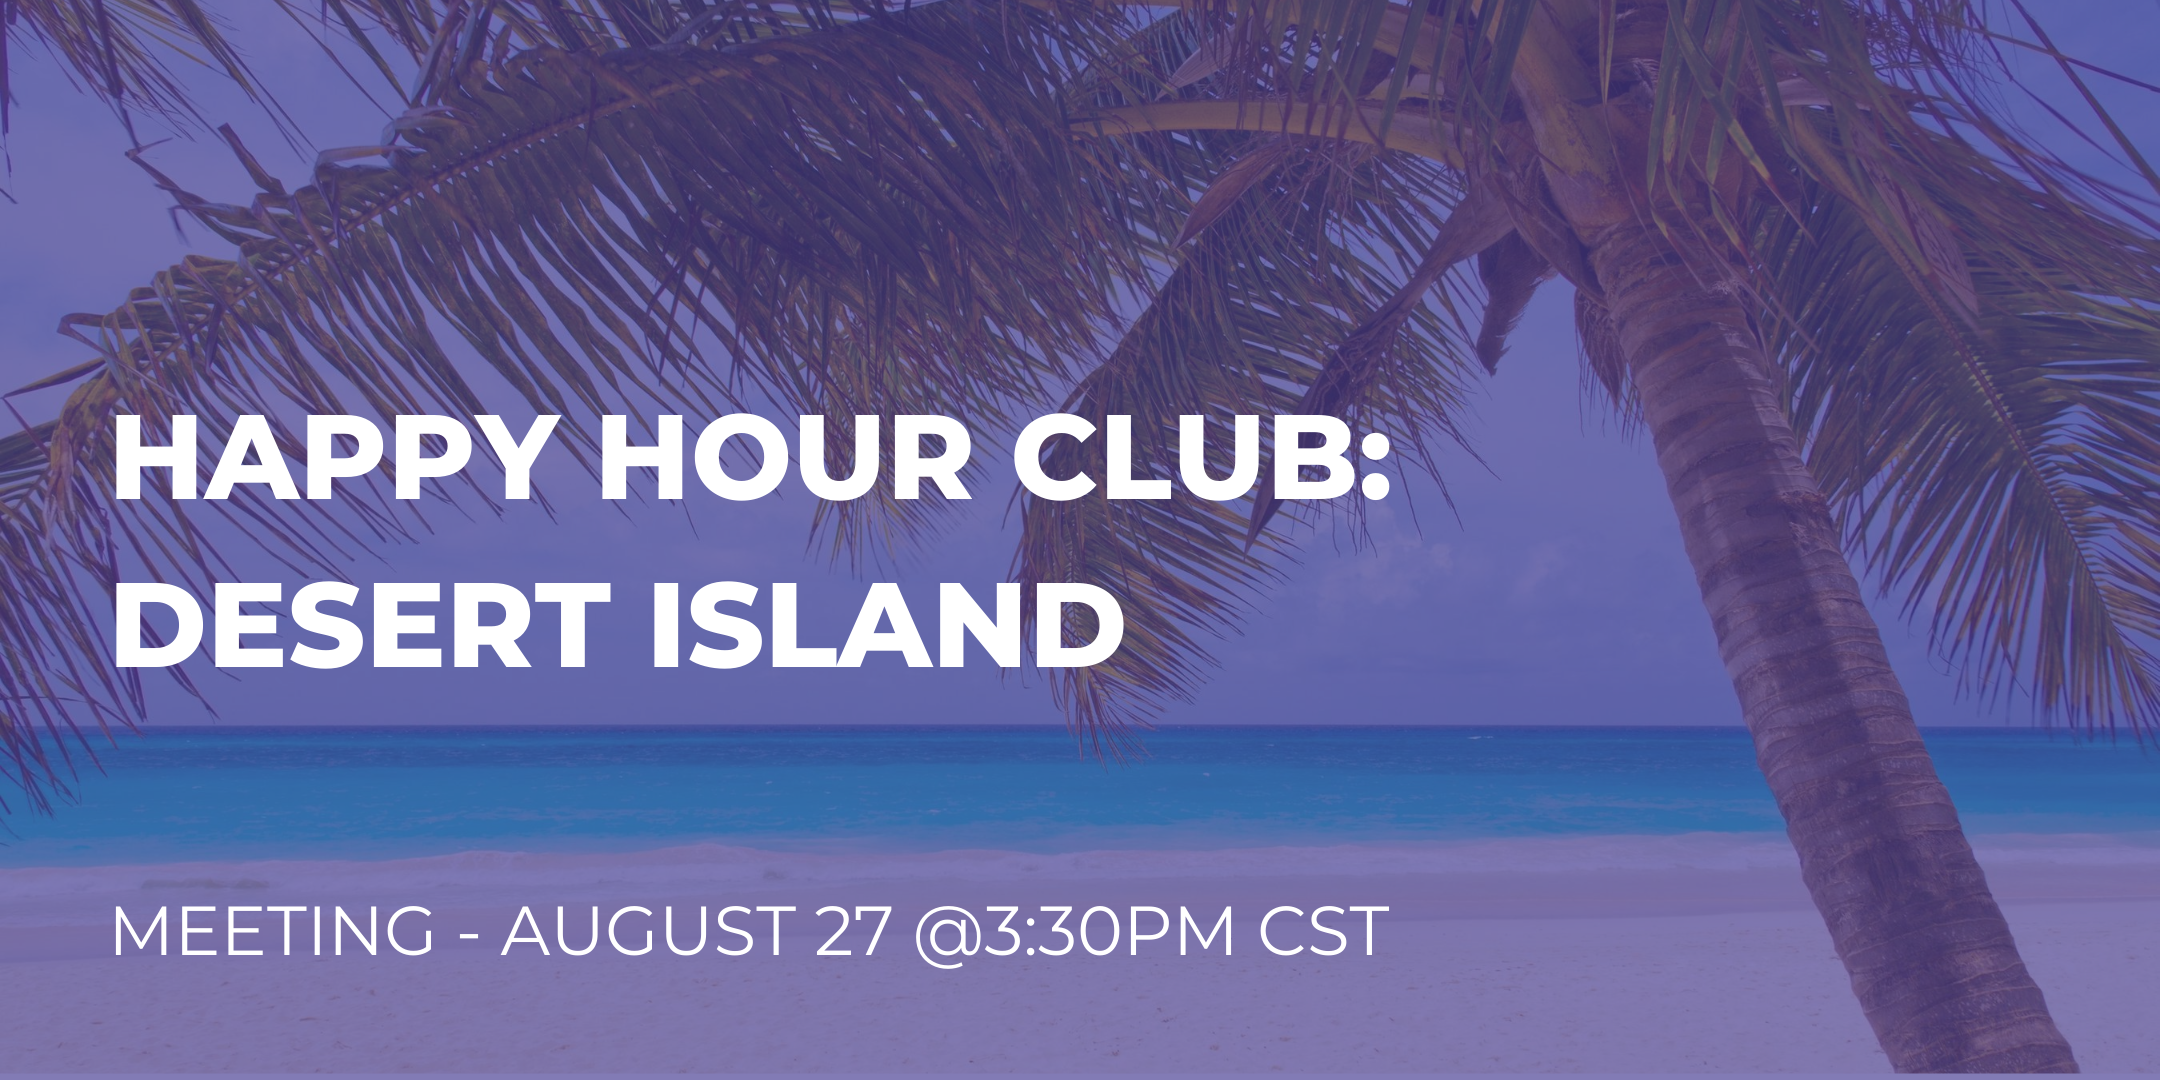 Happy-Hour-Club-Desert-Island